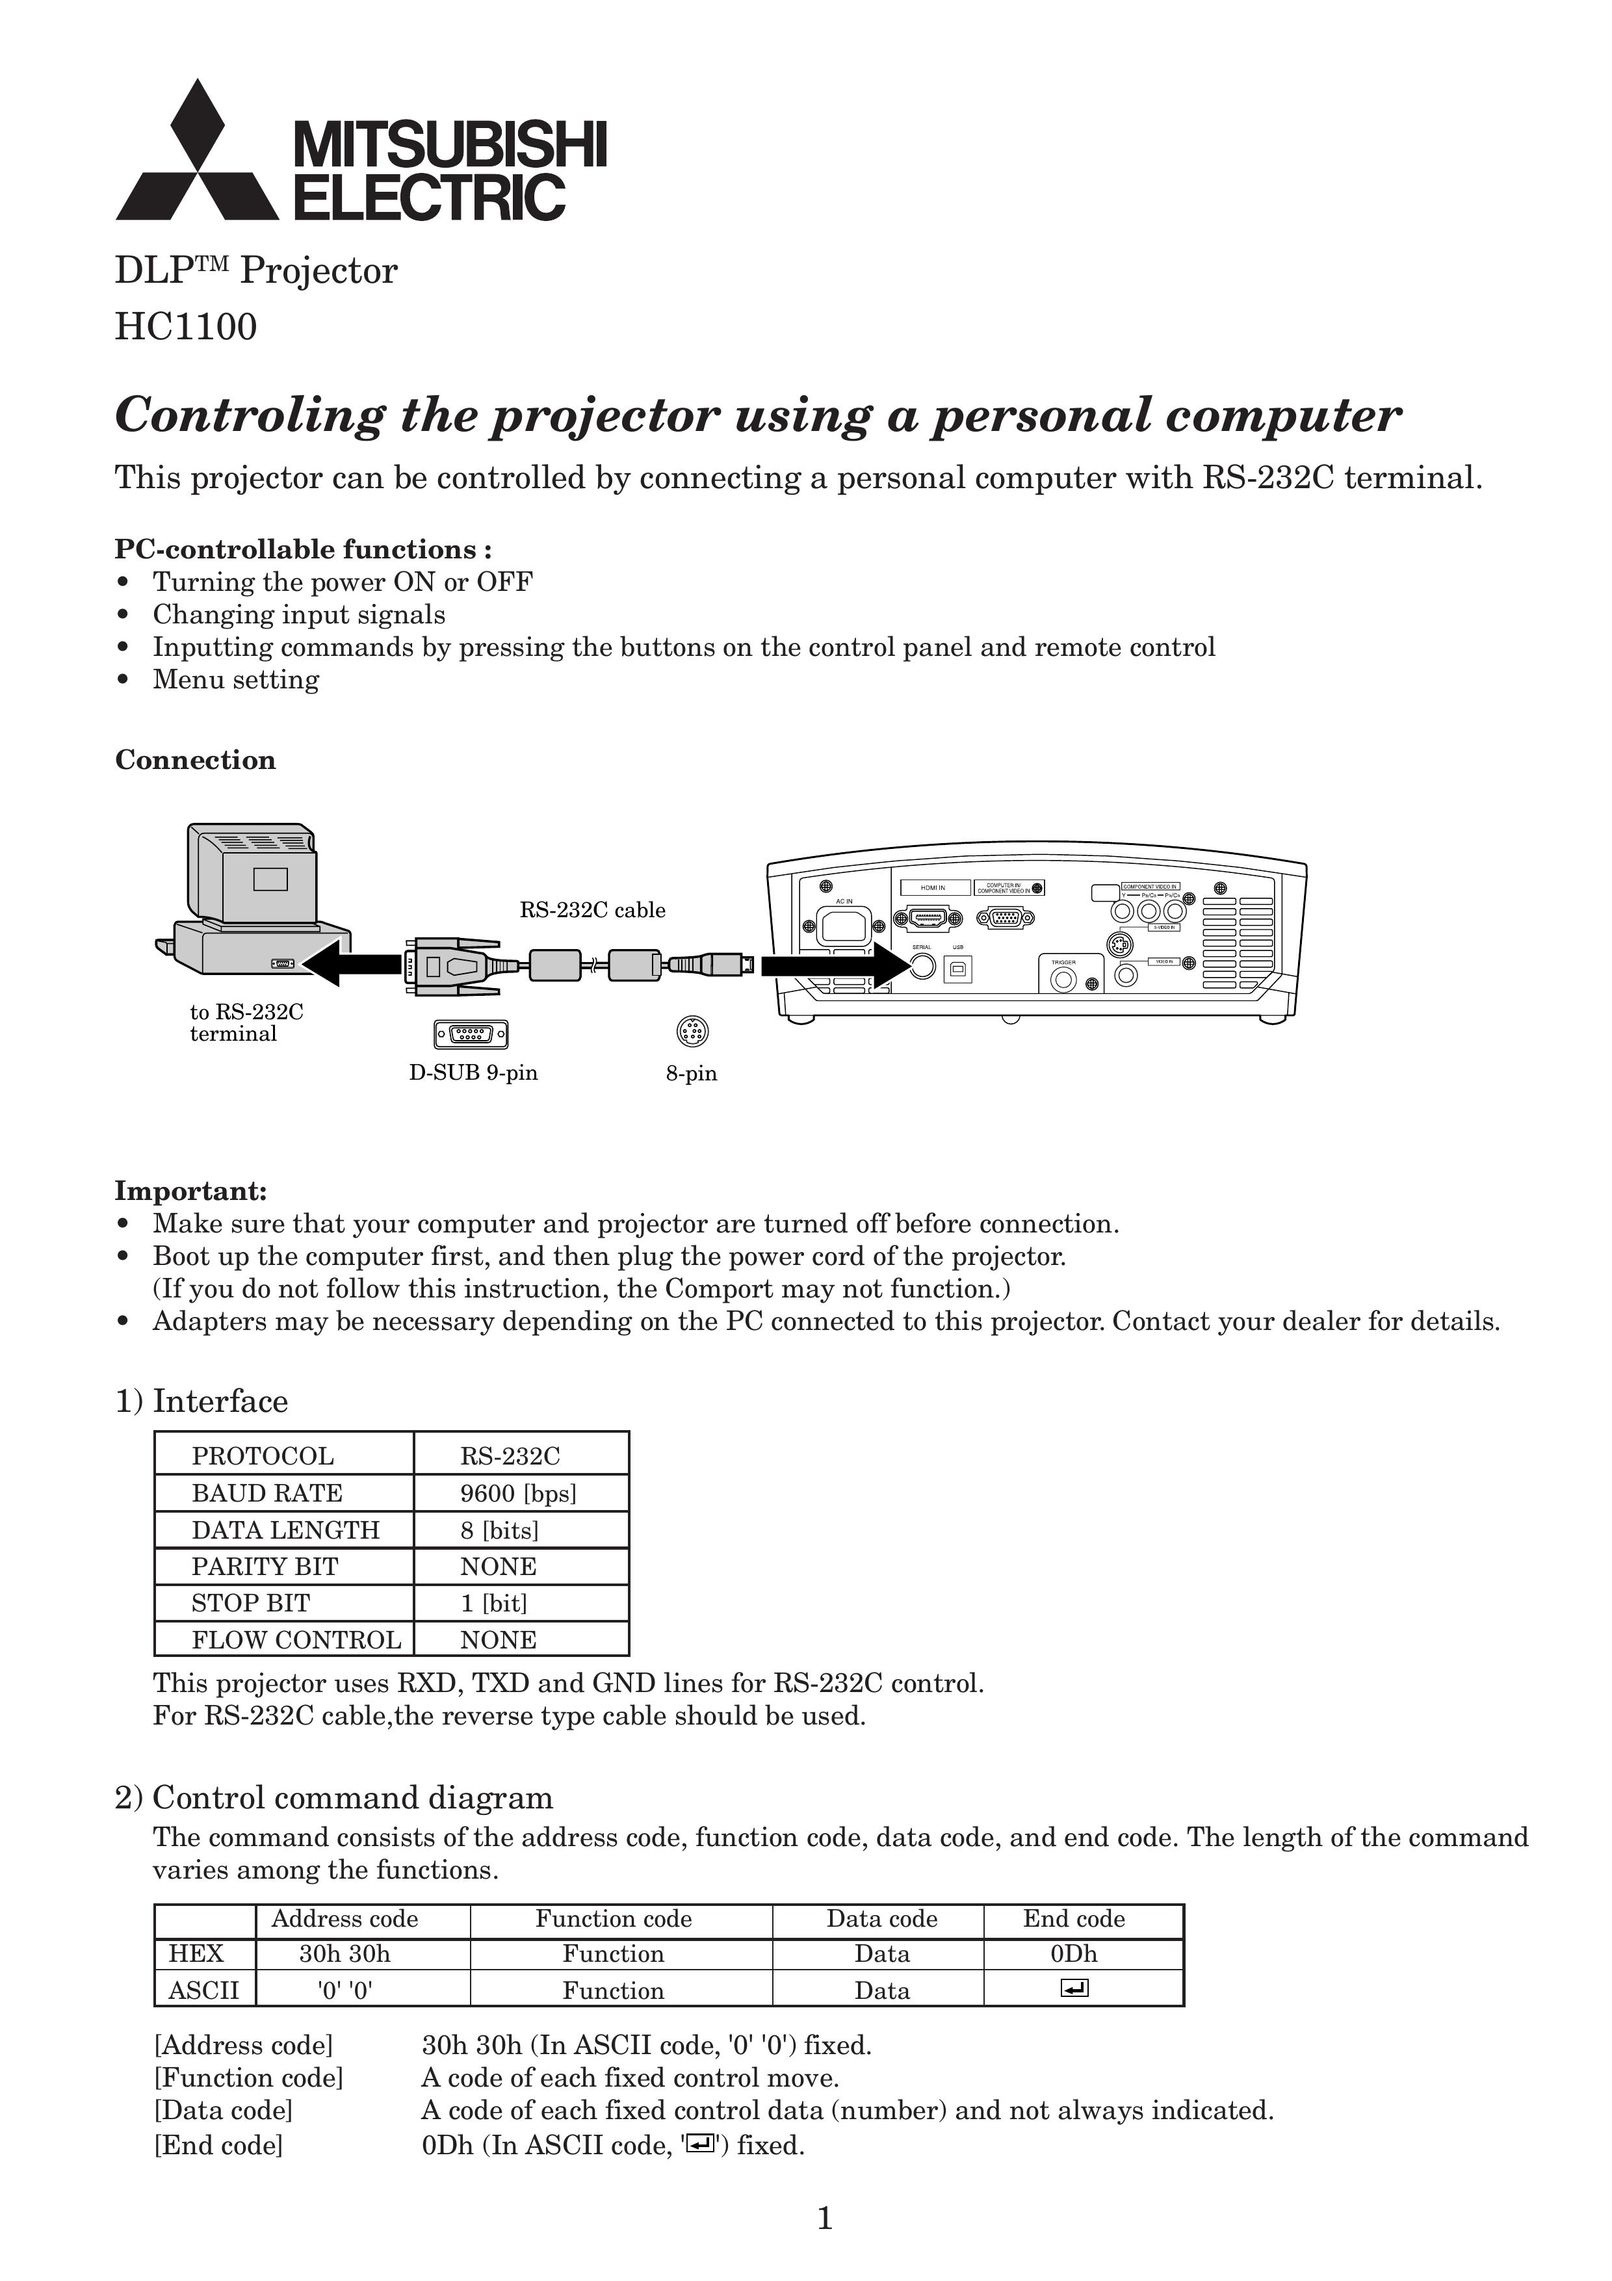 Mitsubishi Electronics HC1100 Projector User Manual